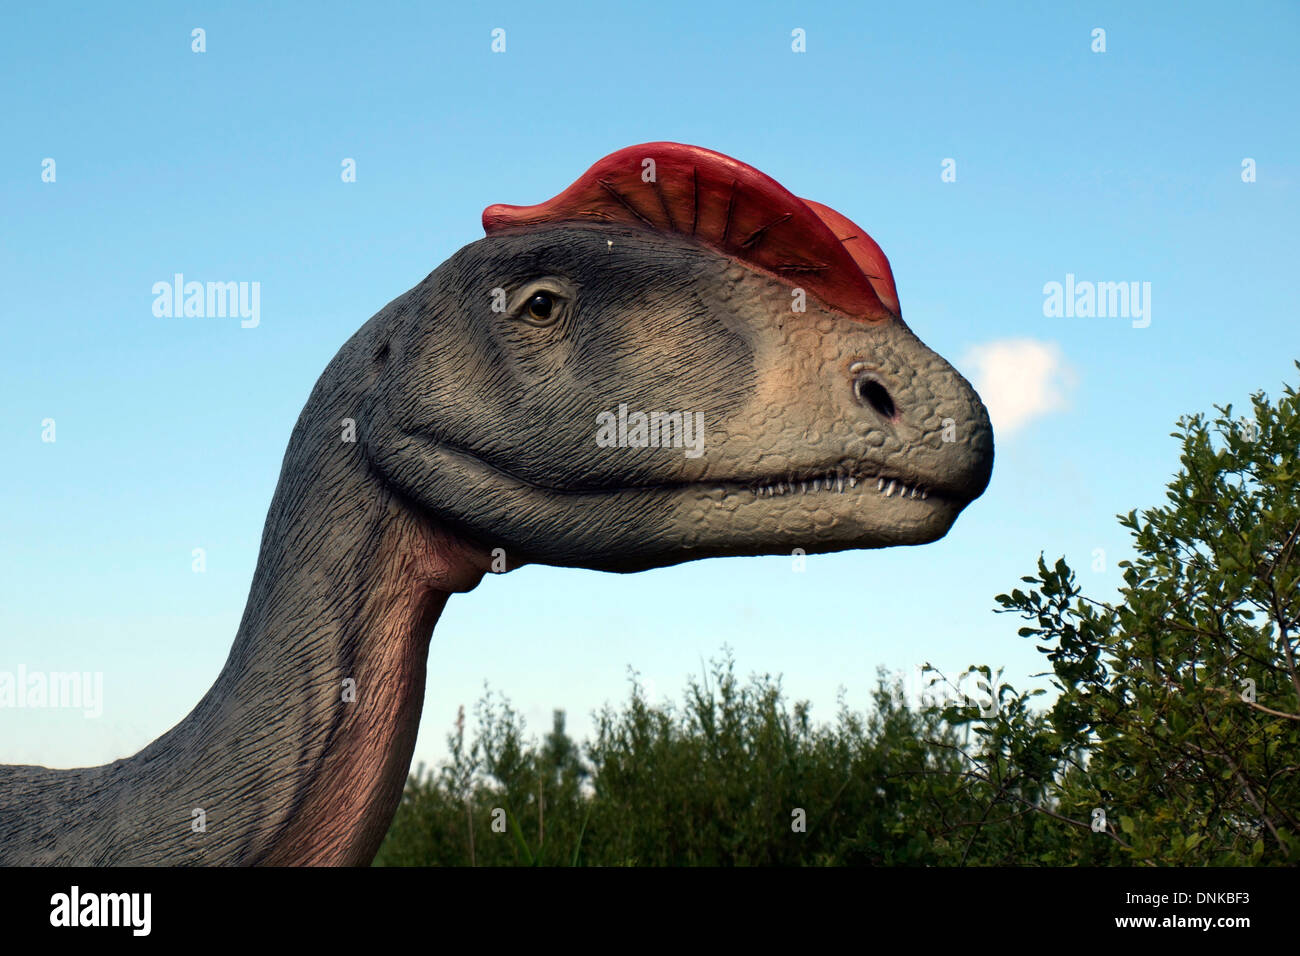 LEBA - 14 Juli: Porträt eines Dinosauriers, 14. Juli 2010 in Leba, Polen in die Park-Dinosaurier in Leba gemacht. Stockfoto